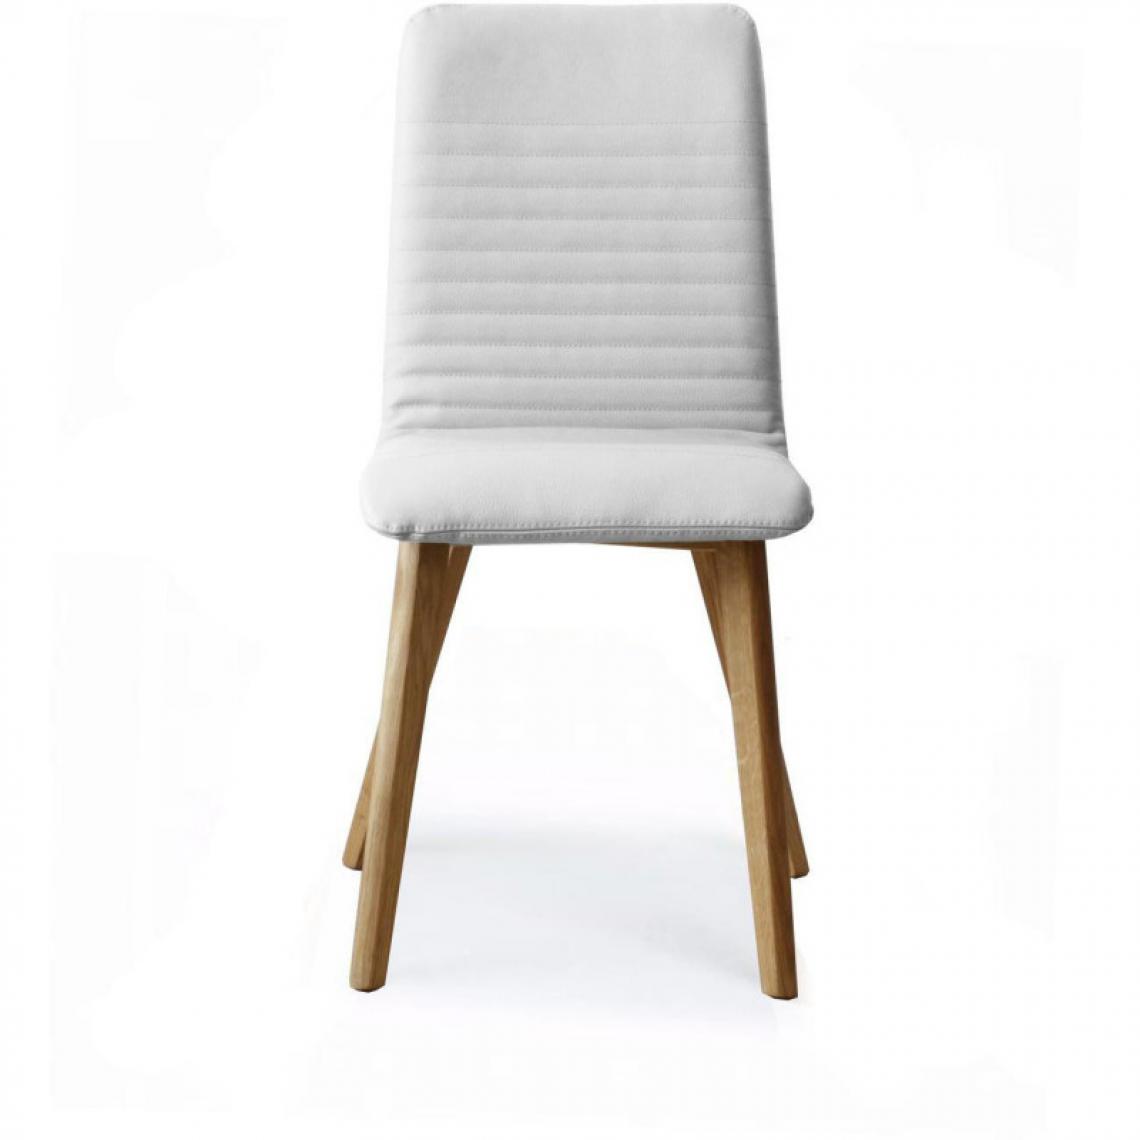 Ac-Deco - Chaise en cuir - L 43 x P 58 x H 89 cm - Blanc et beige - Chaises